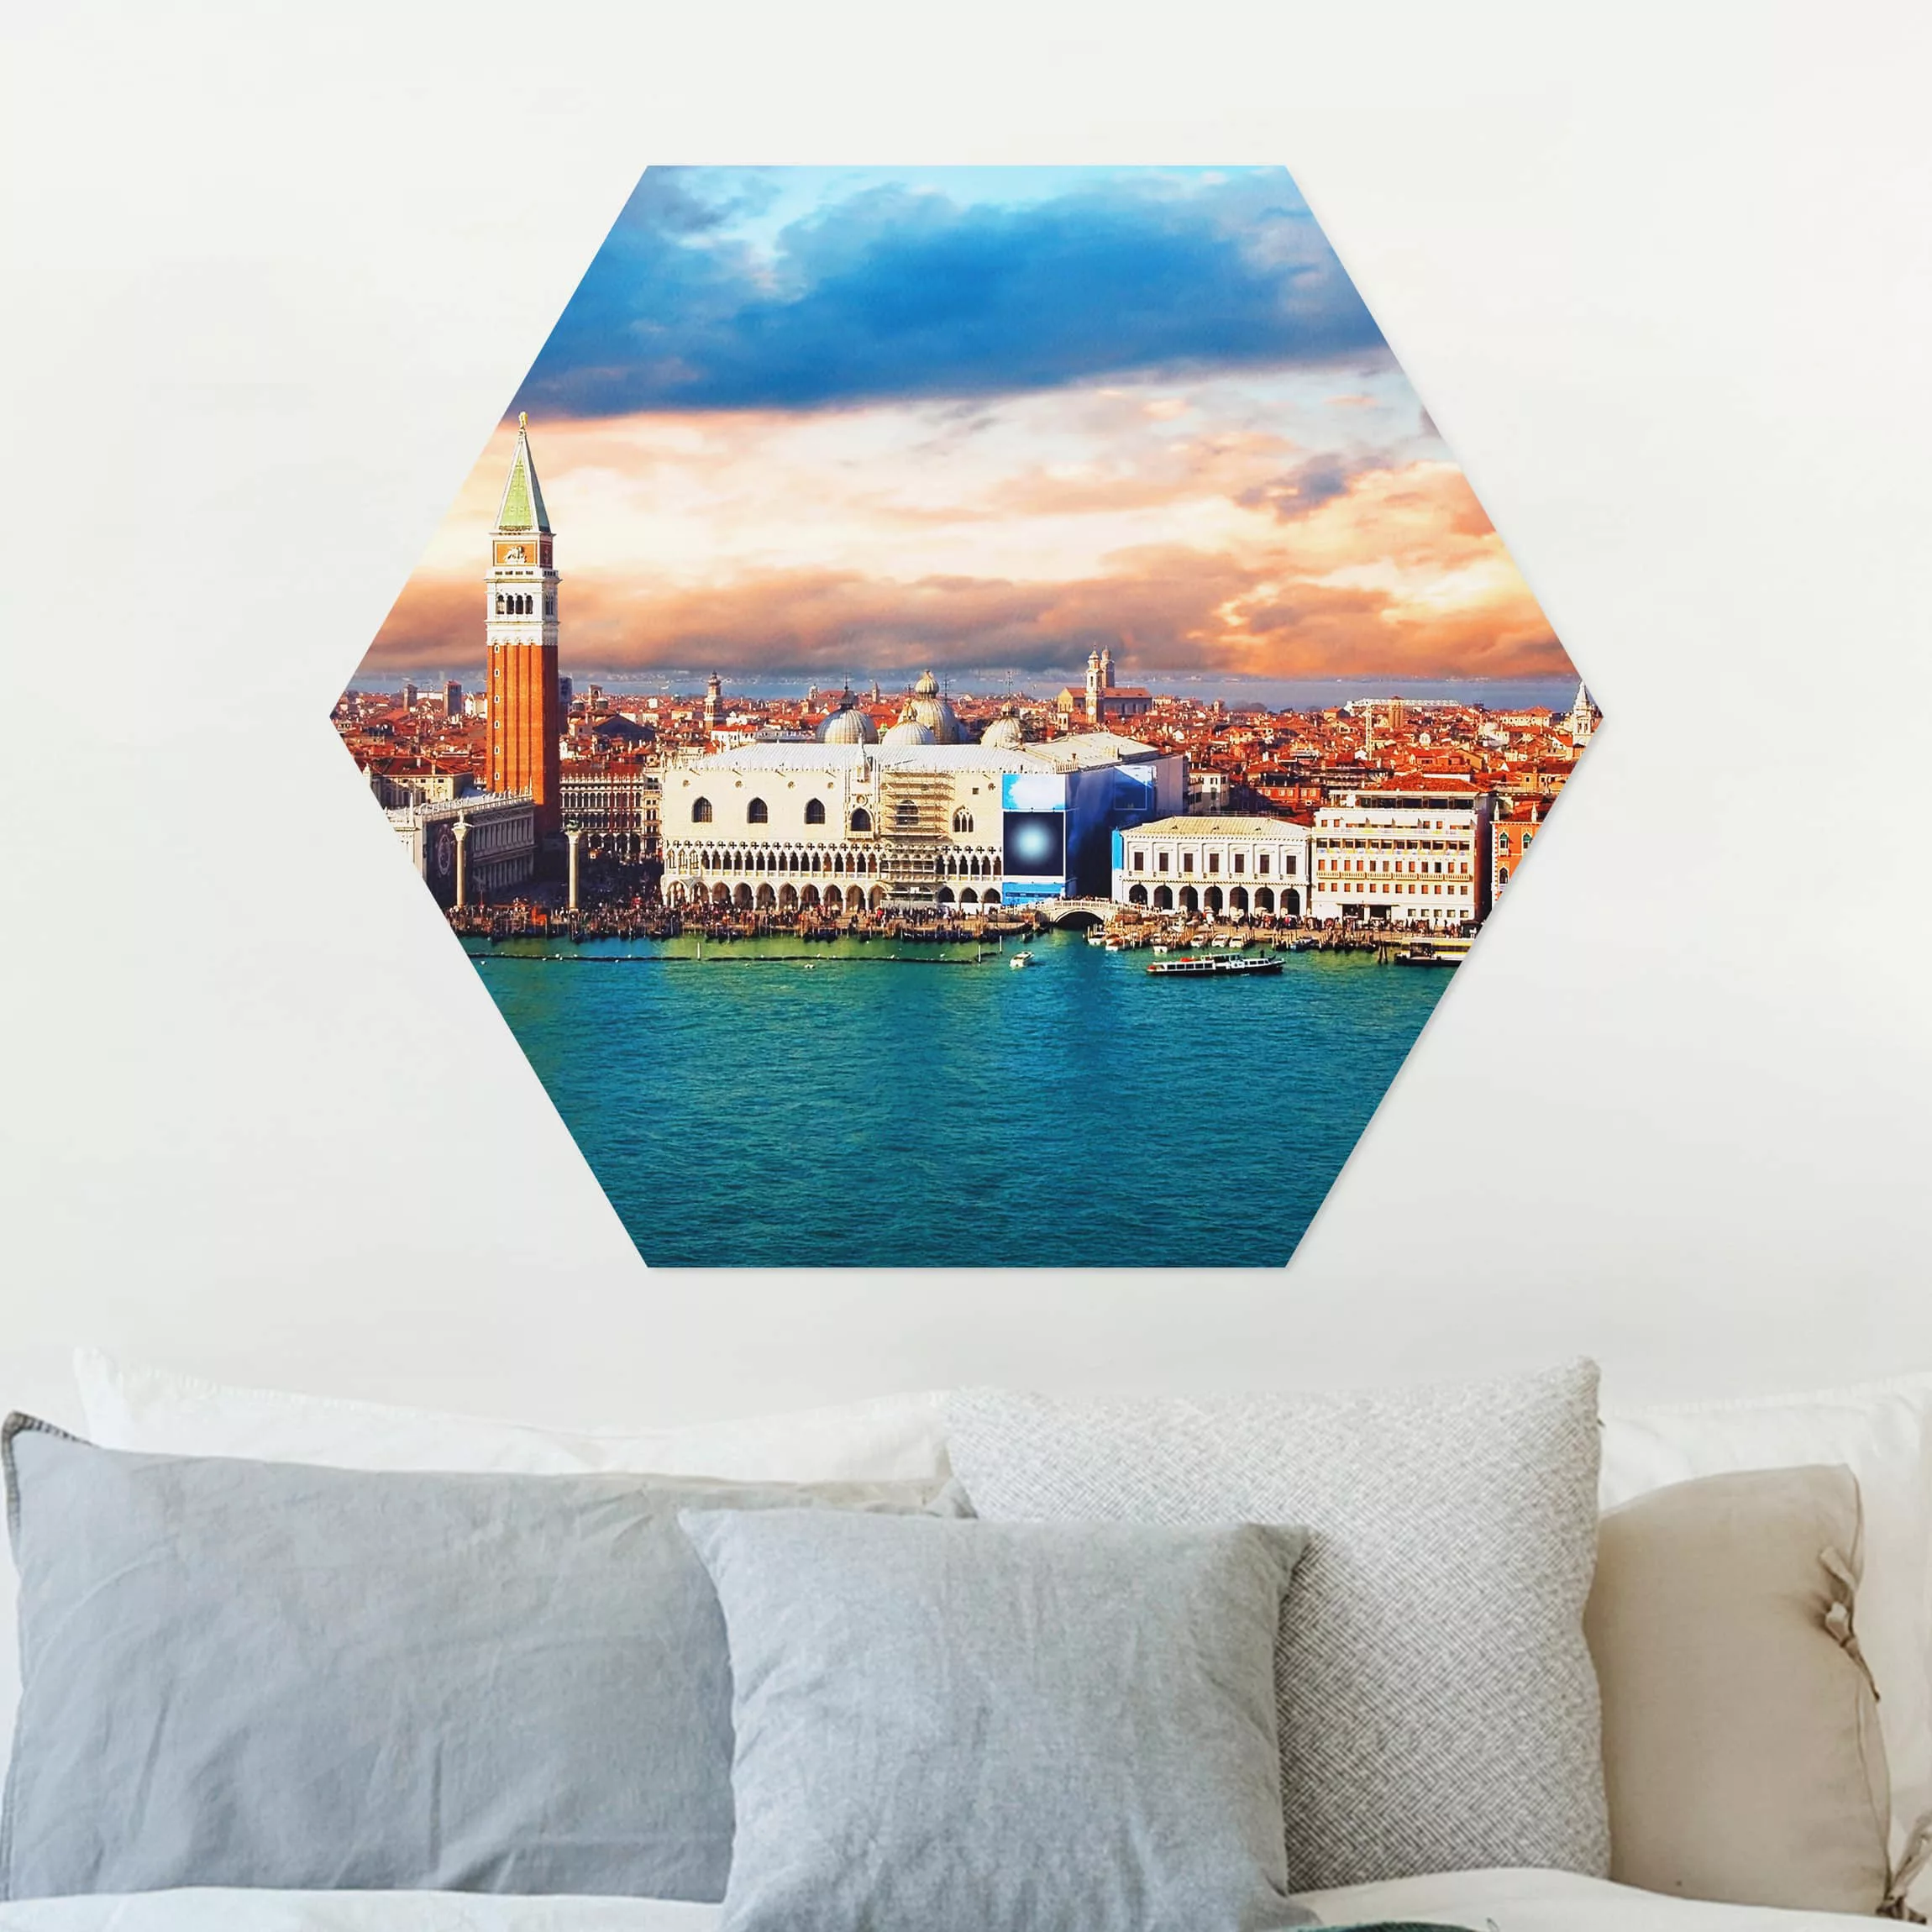 Hexagon-Alu-Dibond Bild Architektur & Skyline Venezia Eve günstig online kaufen